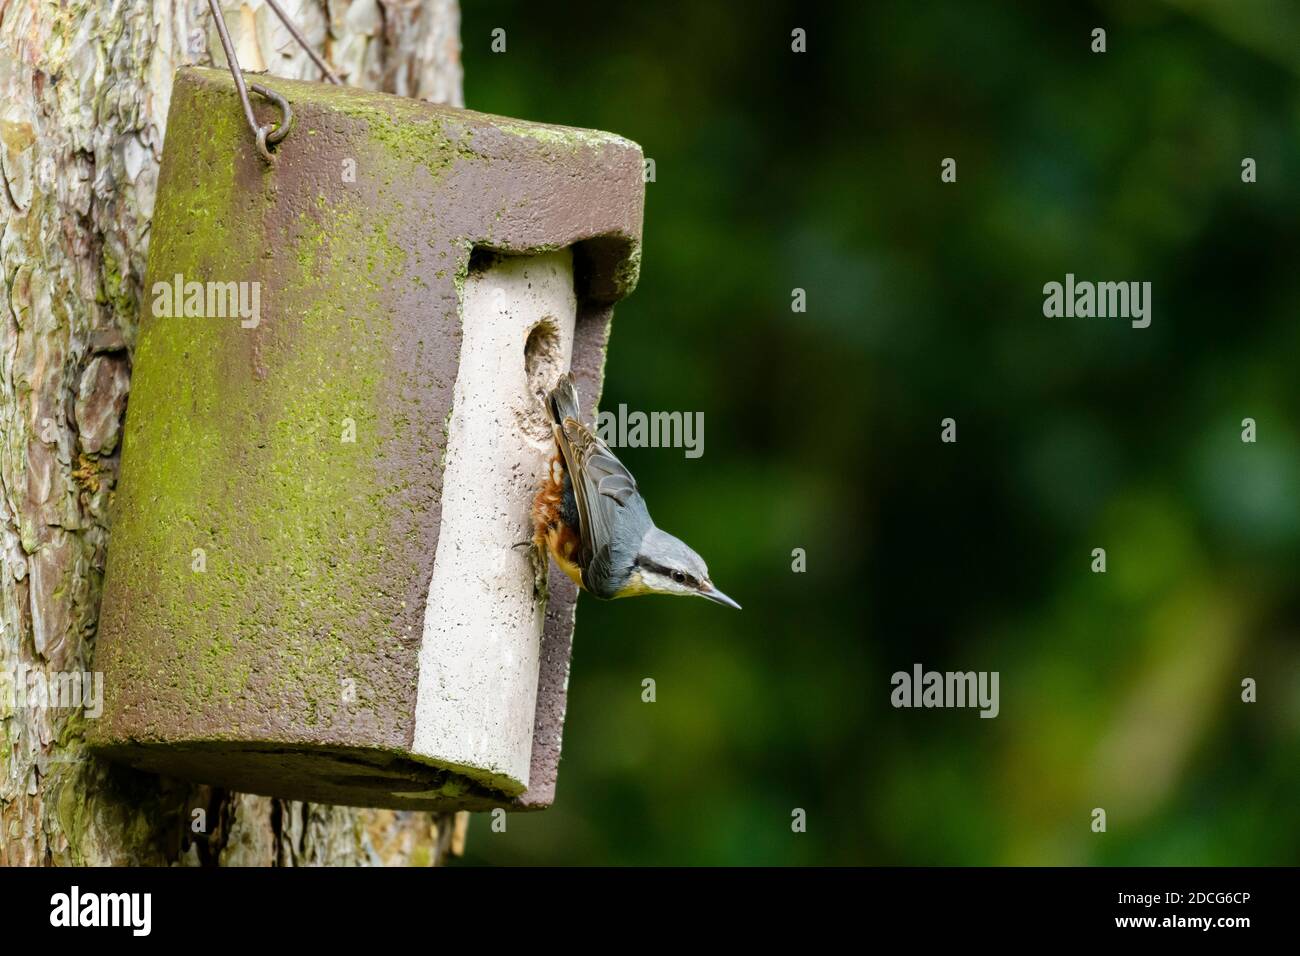 Close-up of single, small nuthatch (garden bird) clinging to tree-hanging nest box by entrance hole (eye-stripe & beak) - West Yorkshire, England, UK. Stock Photo